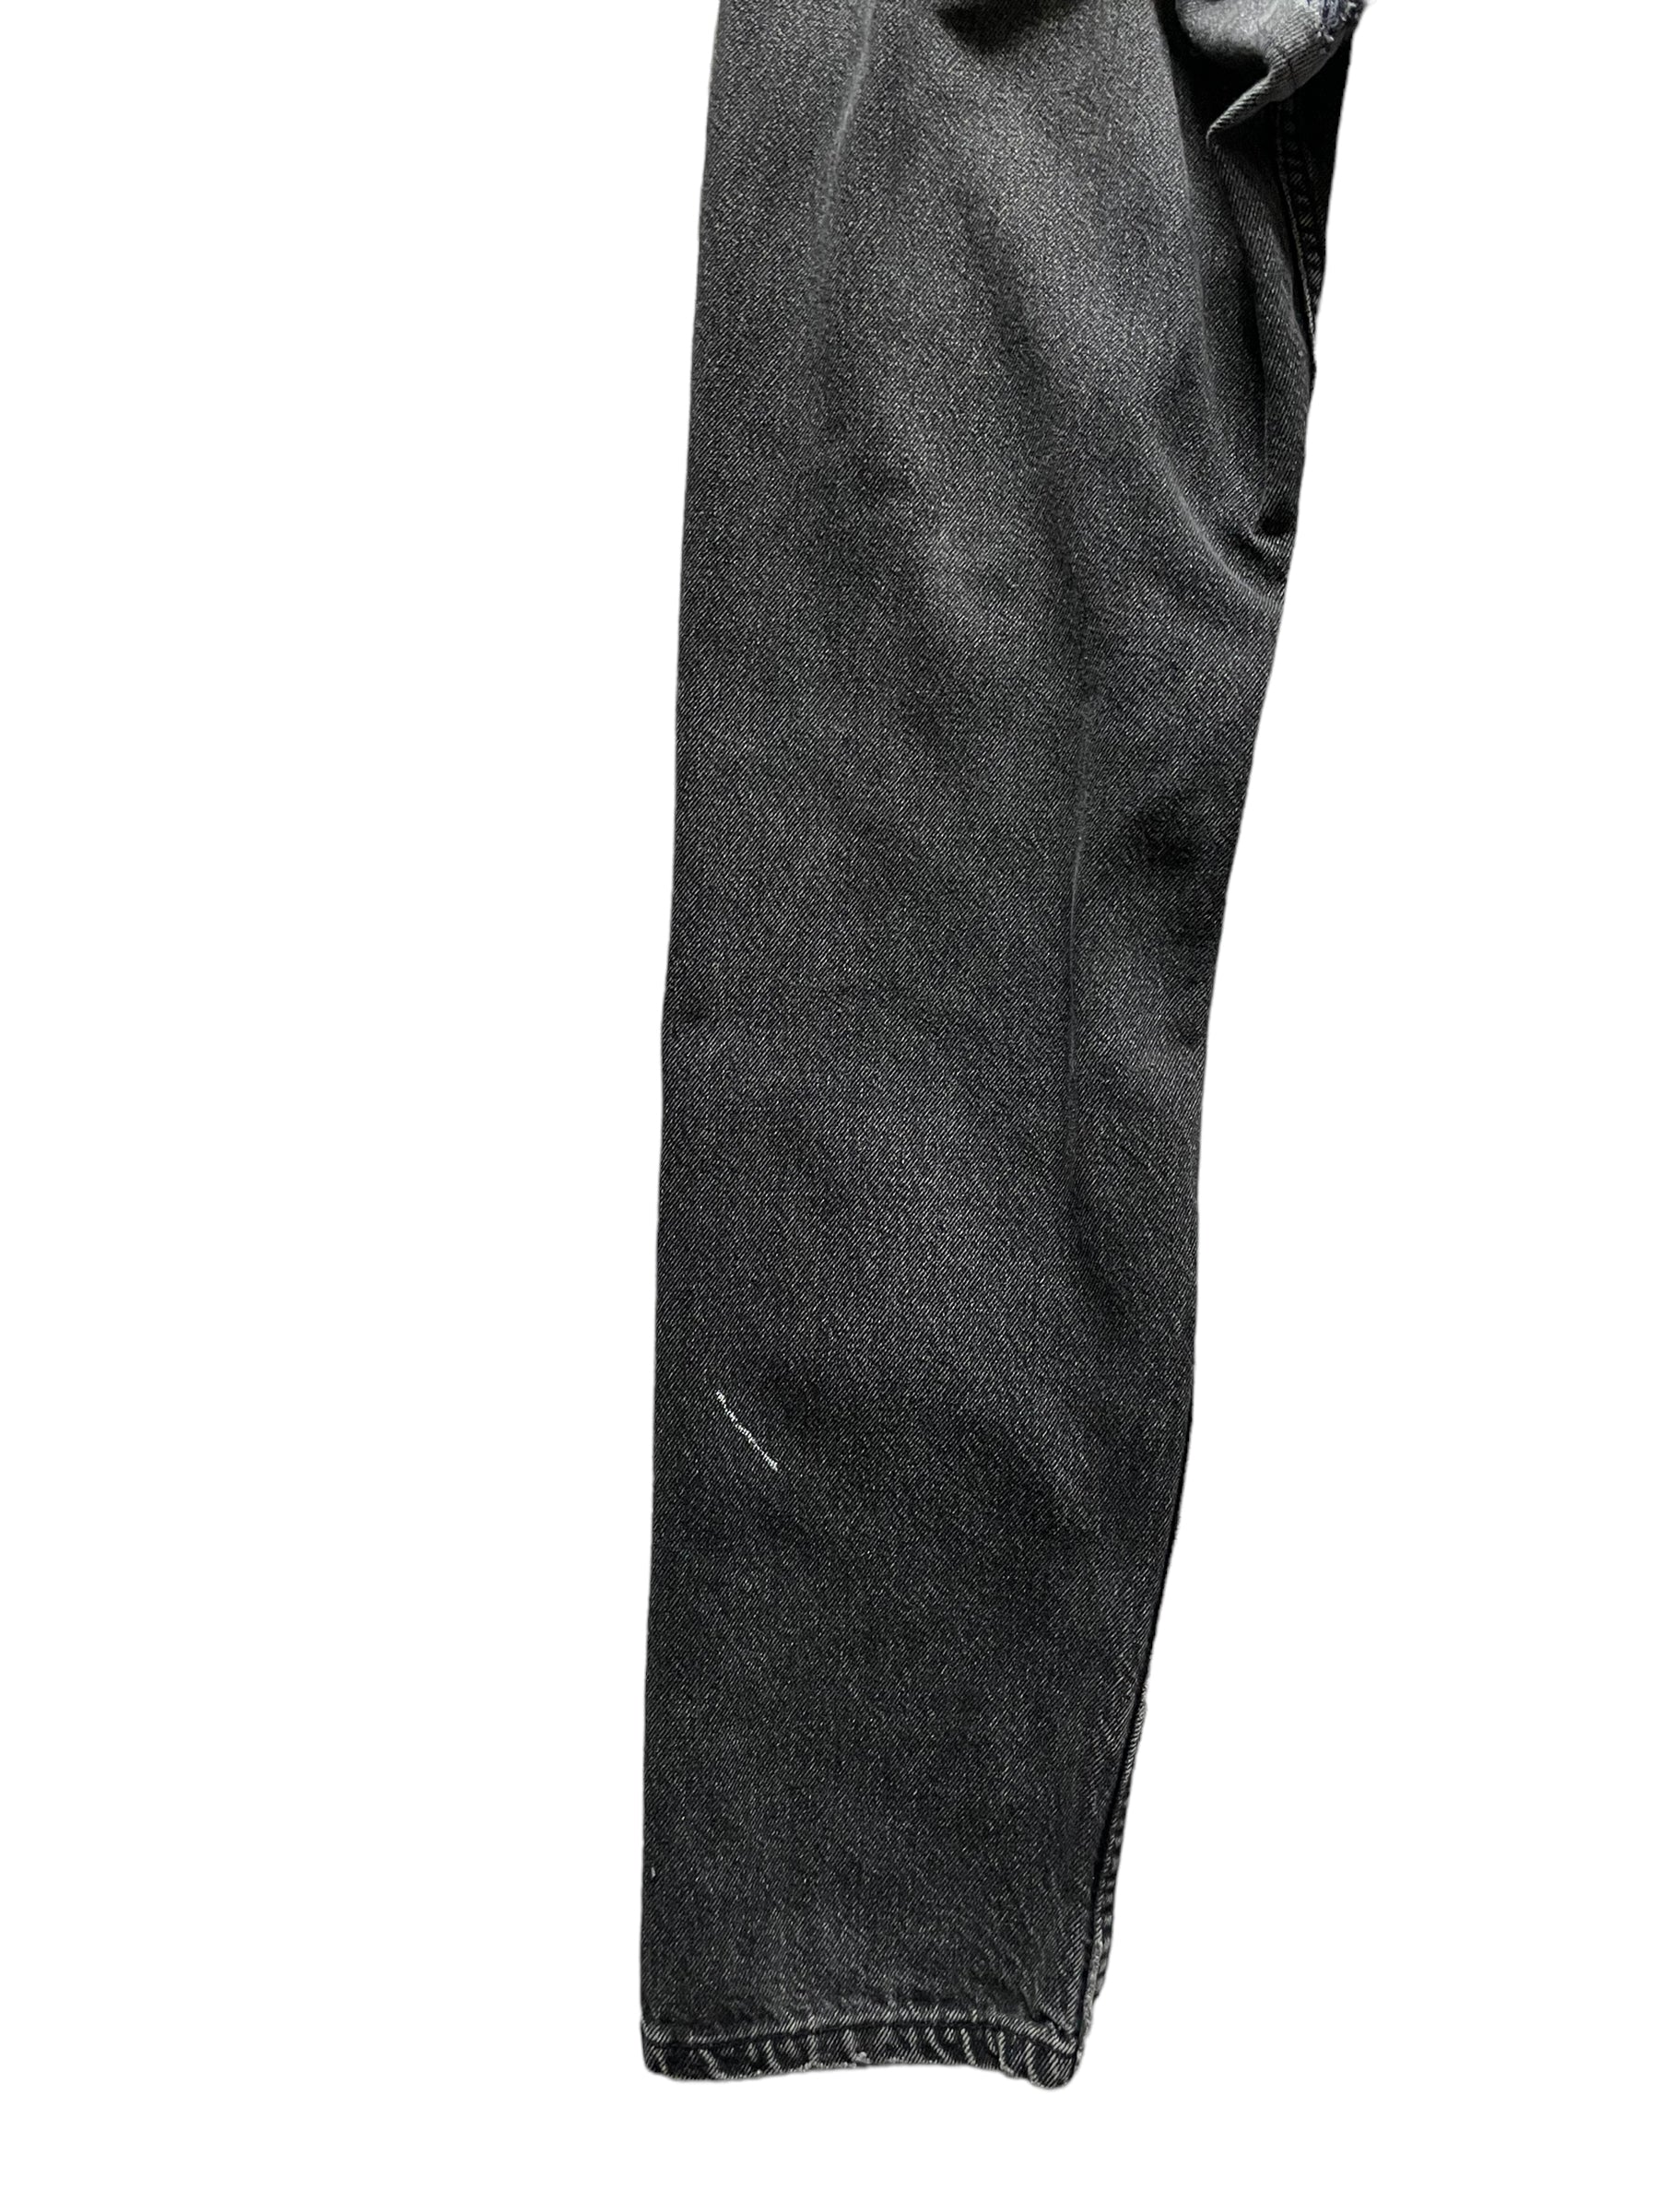 Back leg view of Vintage USA Mended Black Levi's 550s 33x34 